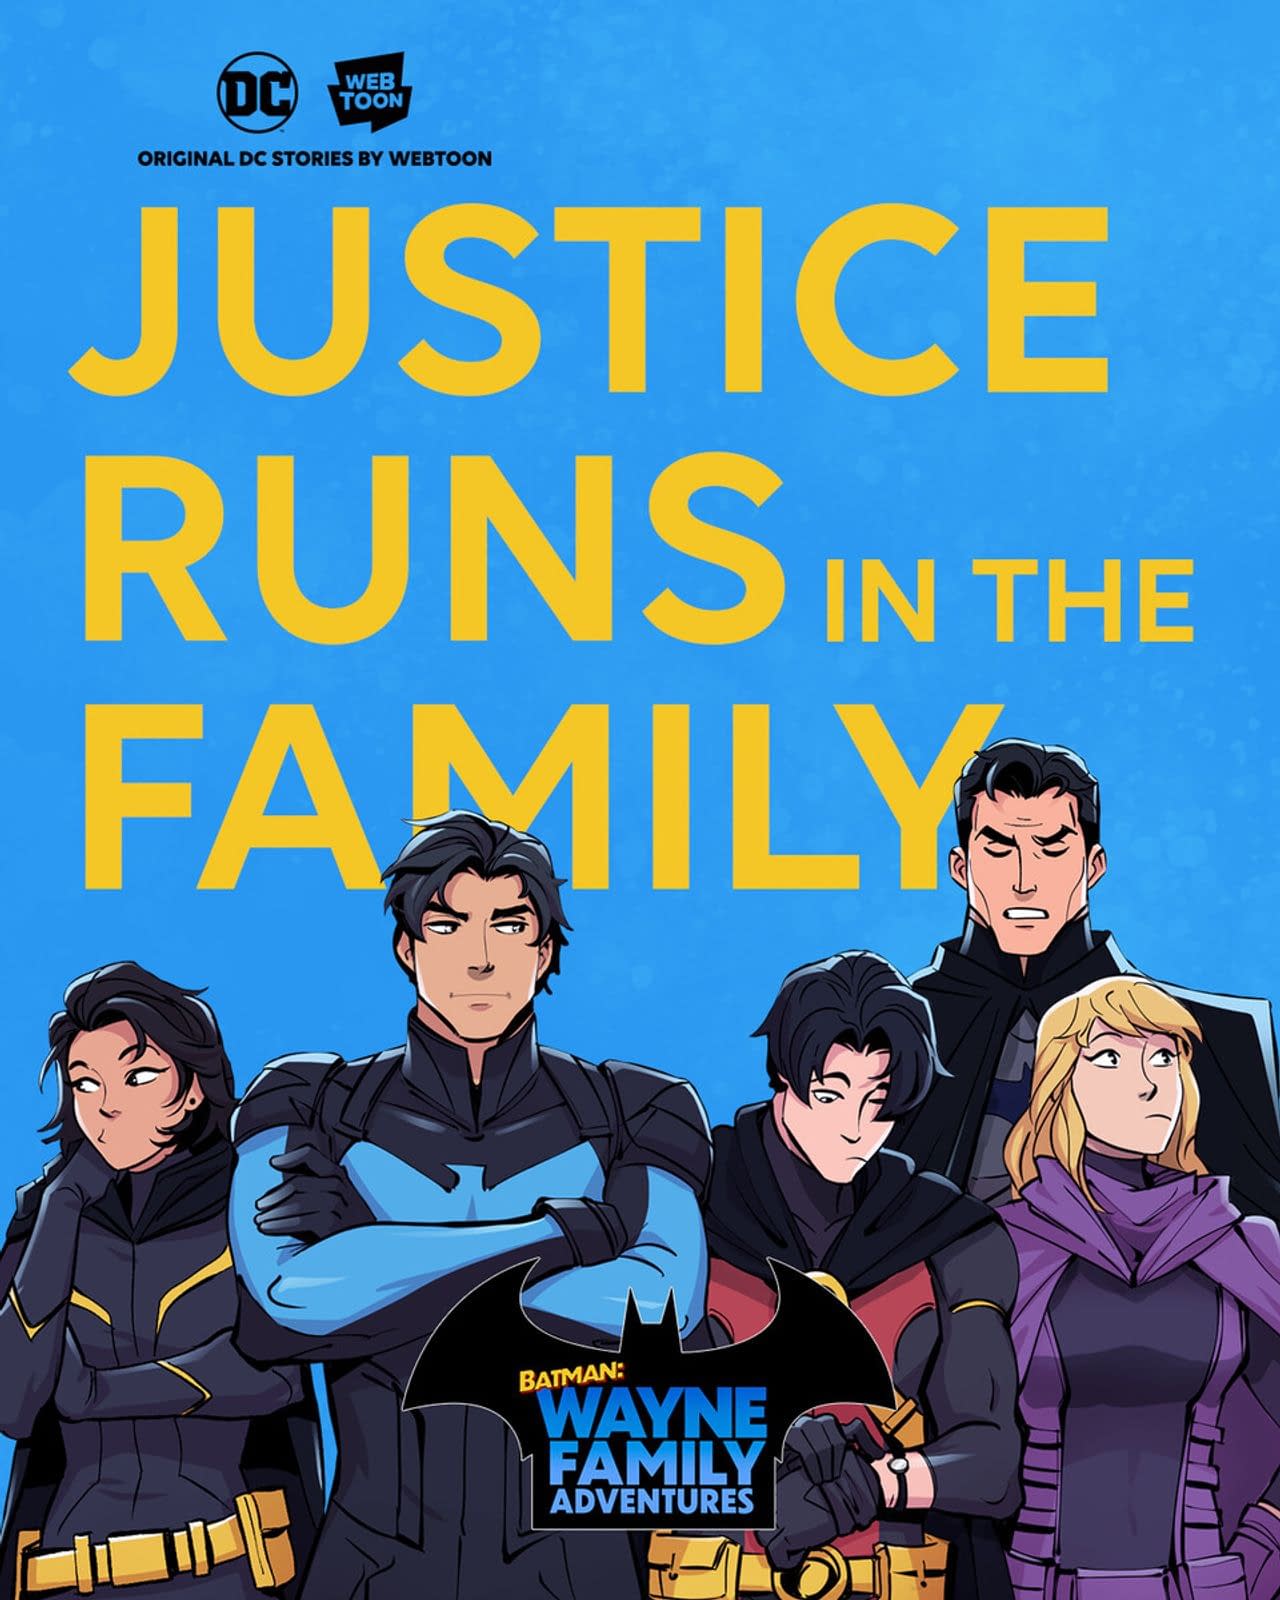 Batman: Wayne Family Adventures is the First DC-Webtoon Collaboration